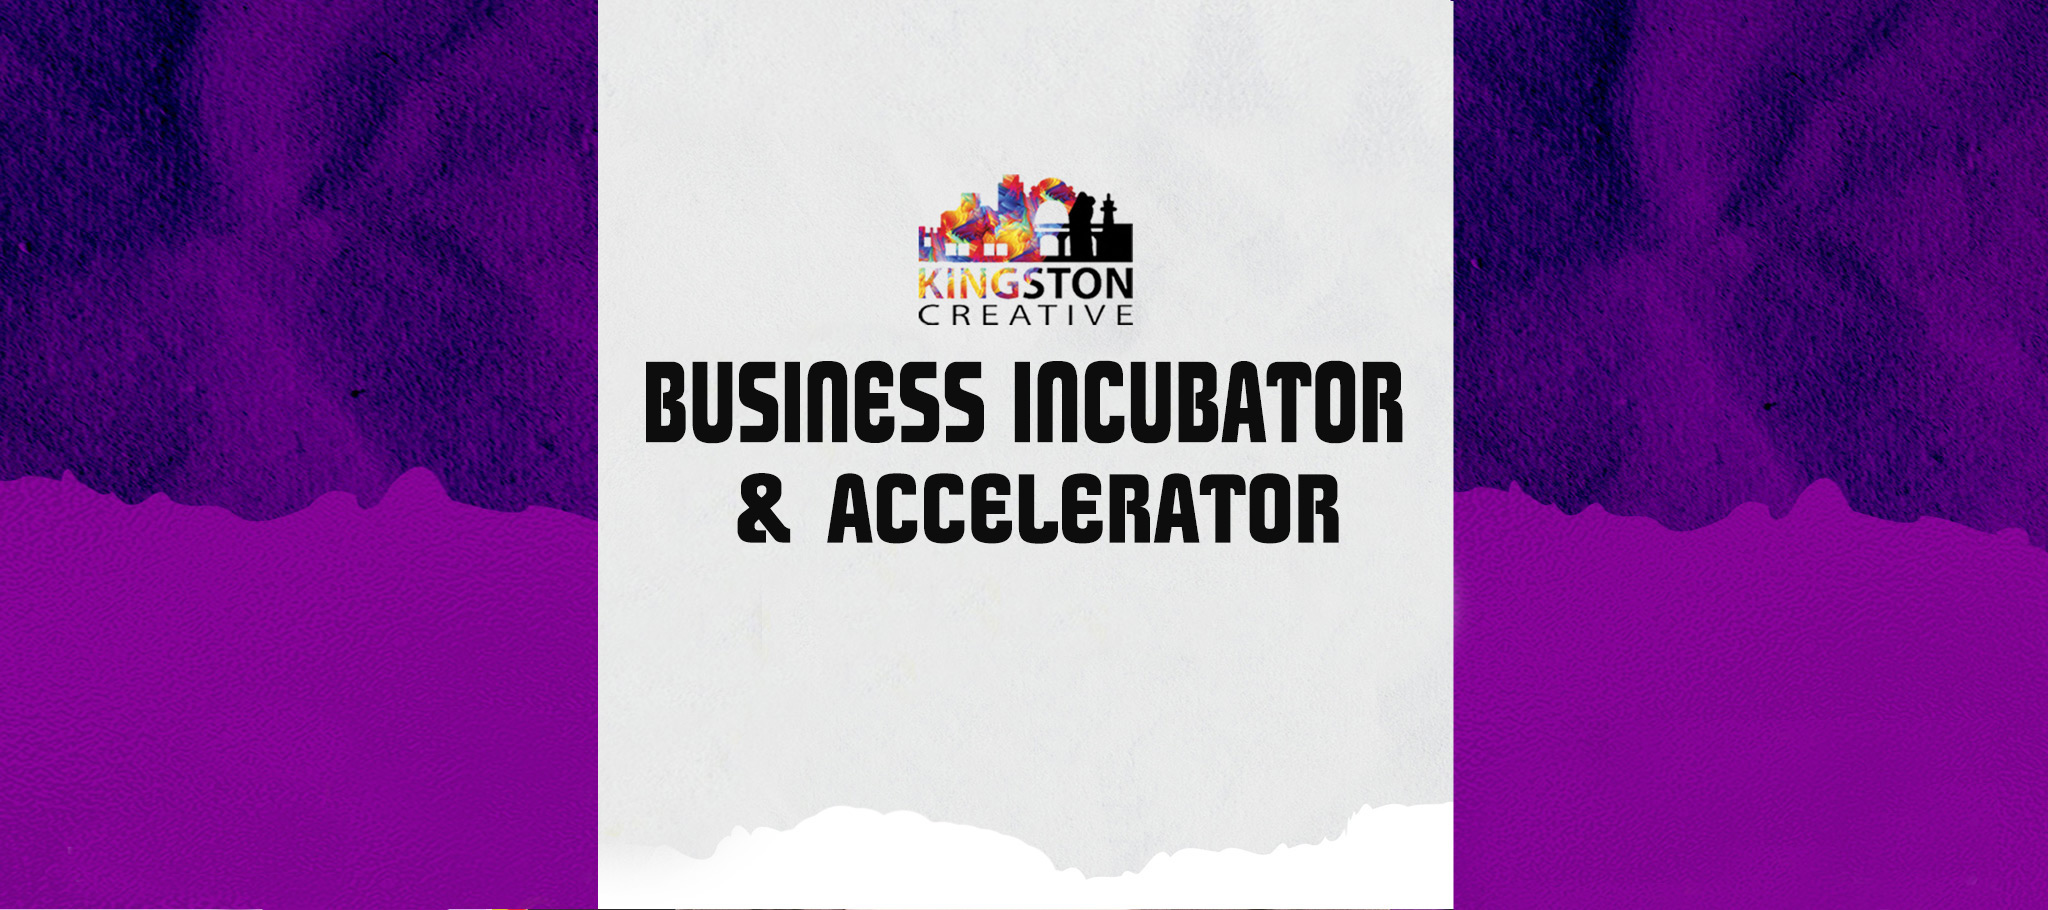 Kingston Creative Business Incubator & Accelerator